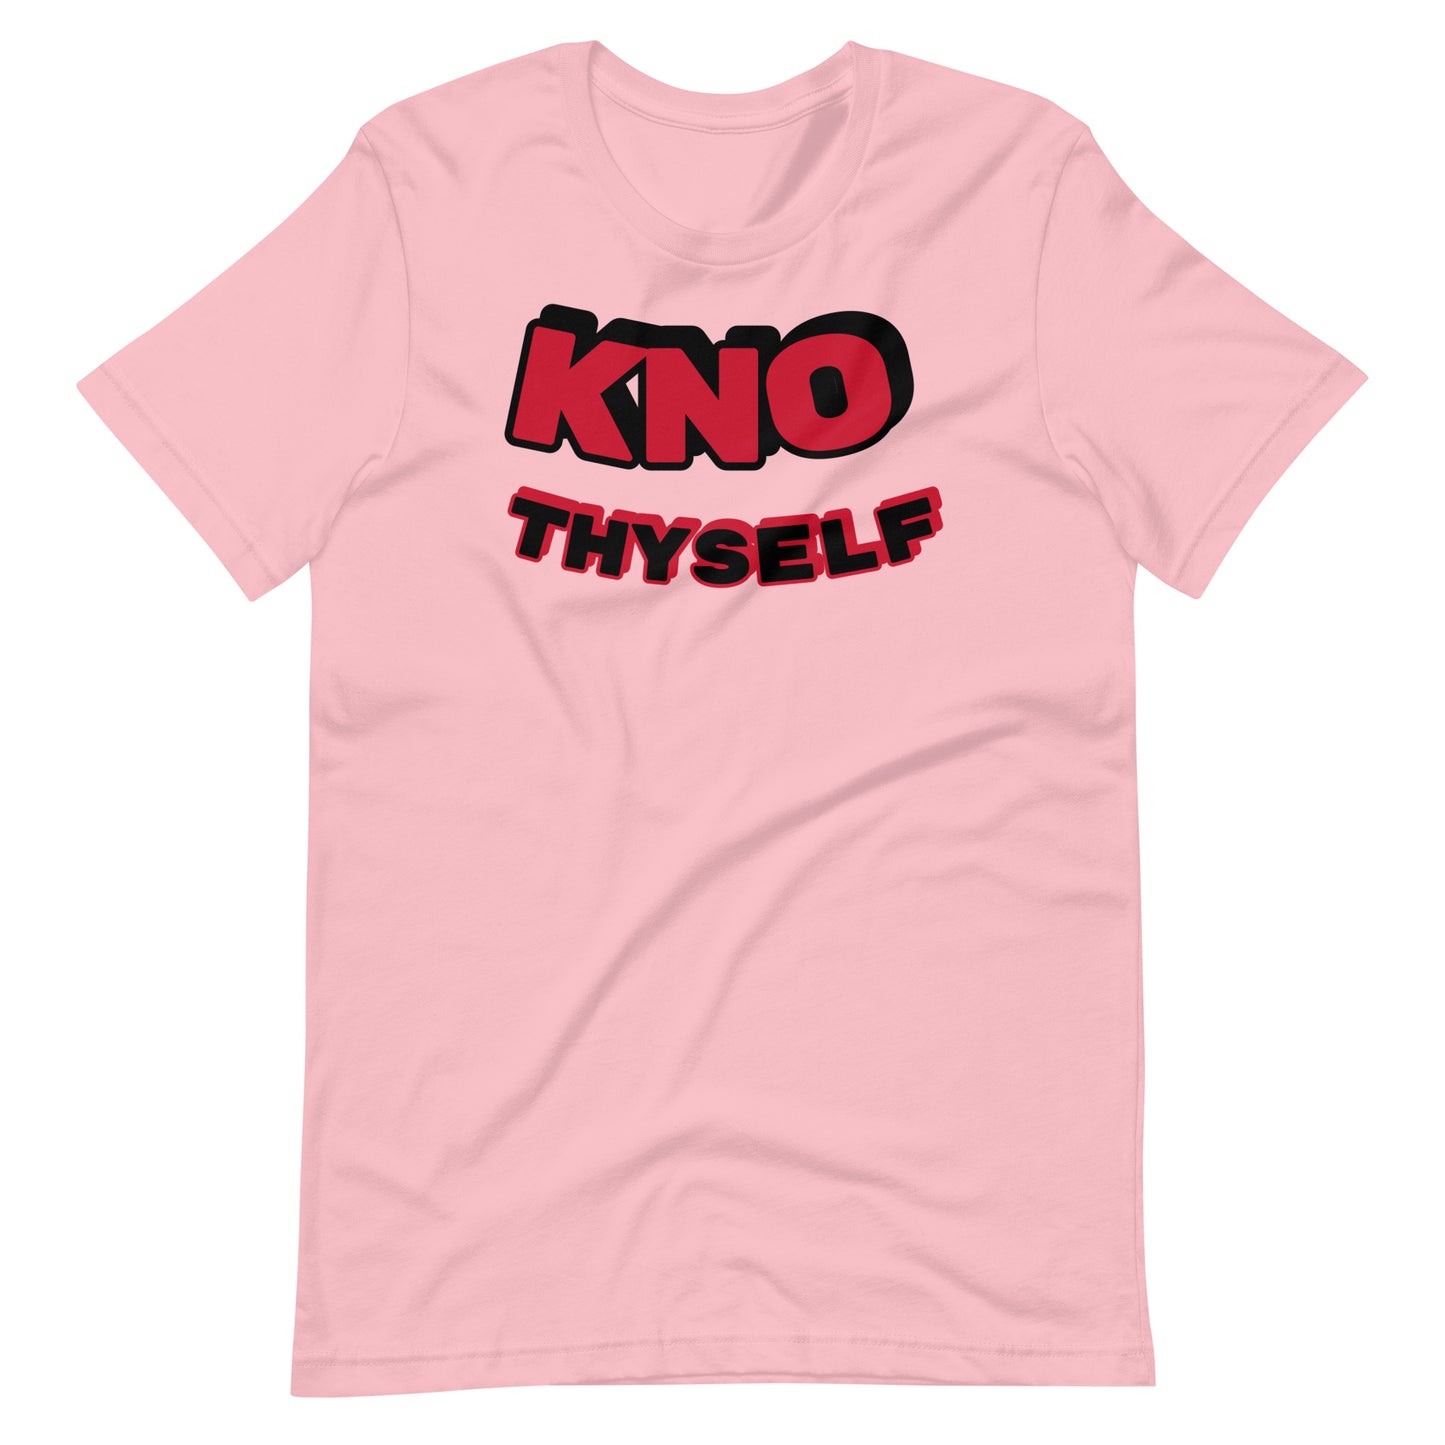 KNO Thyself t-shirt